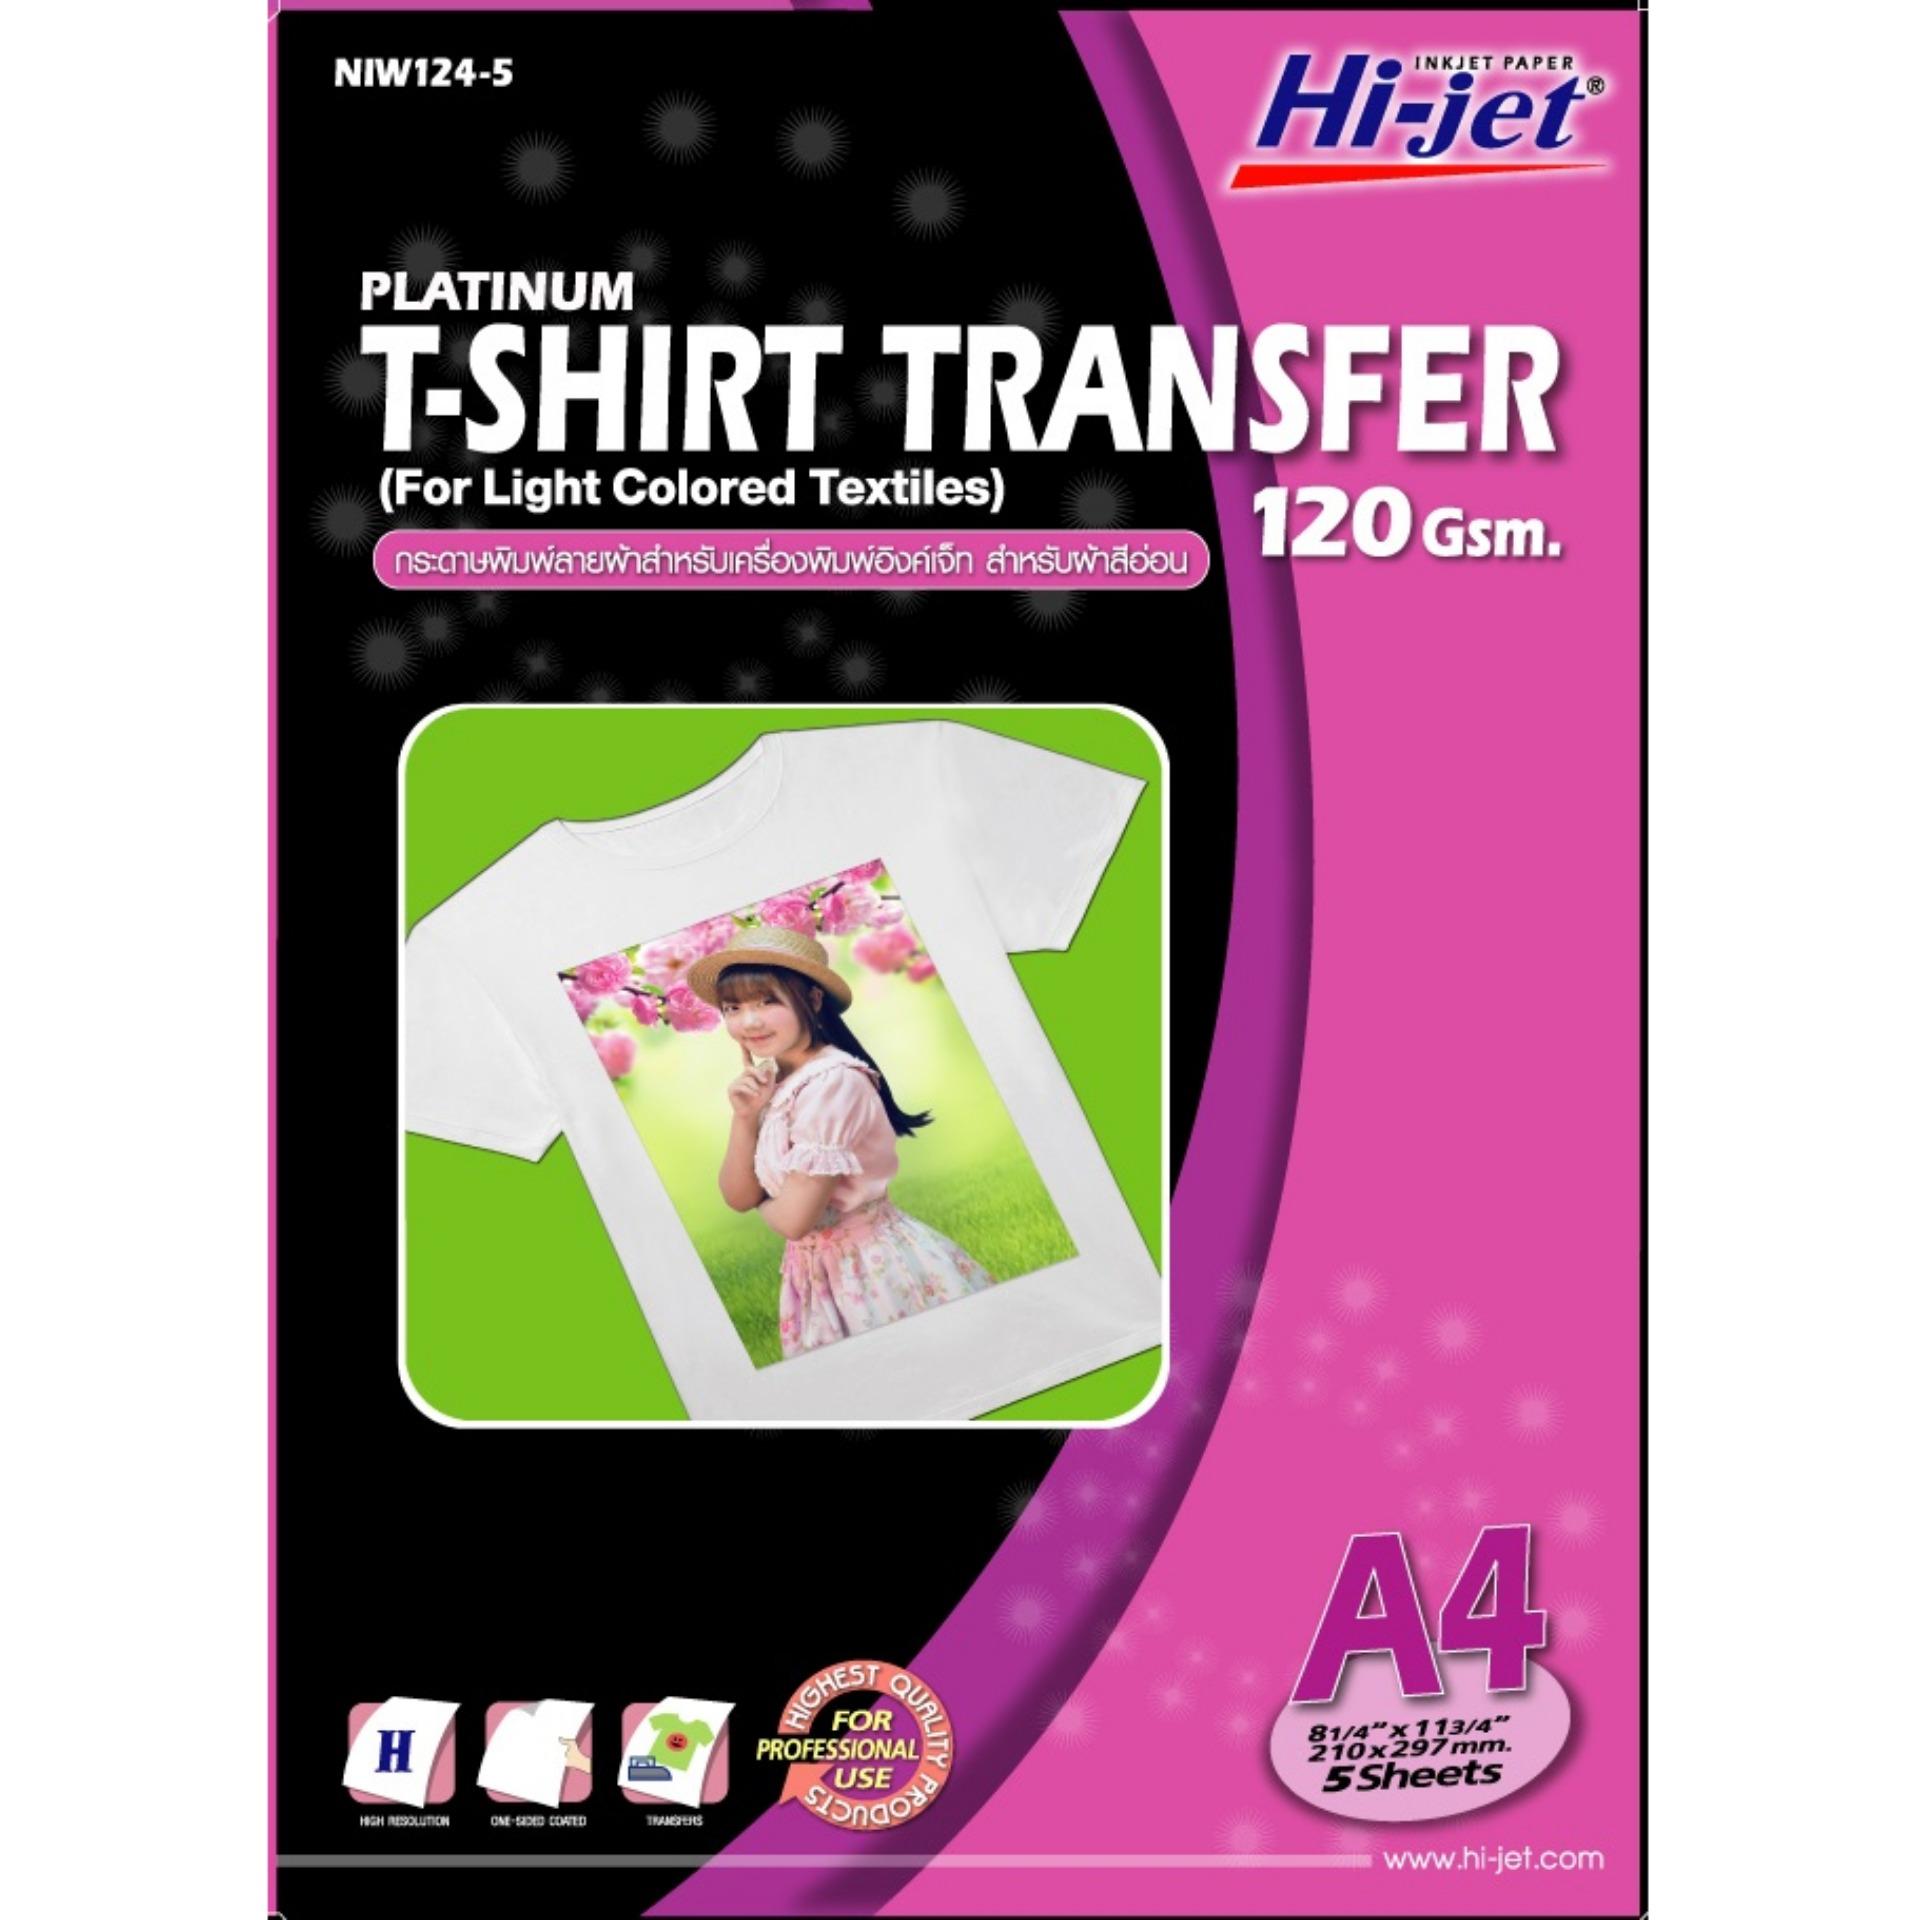 Hi-jet   T-SHIRT  TRANSFER  FOR  LIGHT  COLOREDกระดาษเคมีรีดสื้อสำหรับผ้าสีอ่อน120แกรมA4  (30  Sheets)